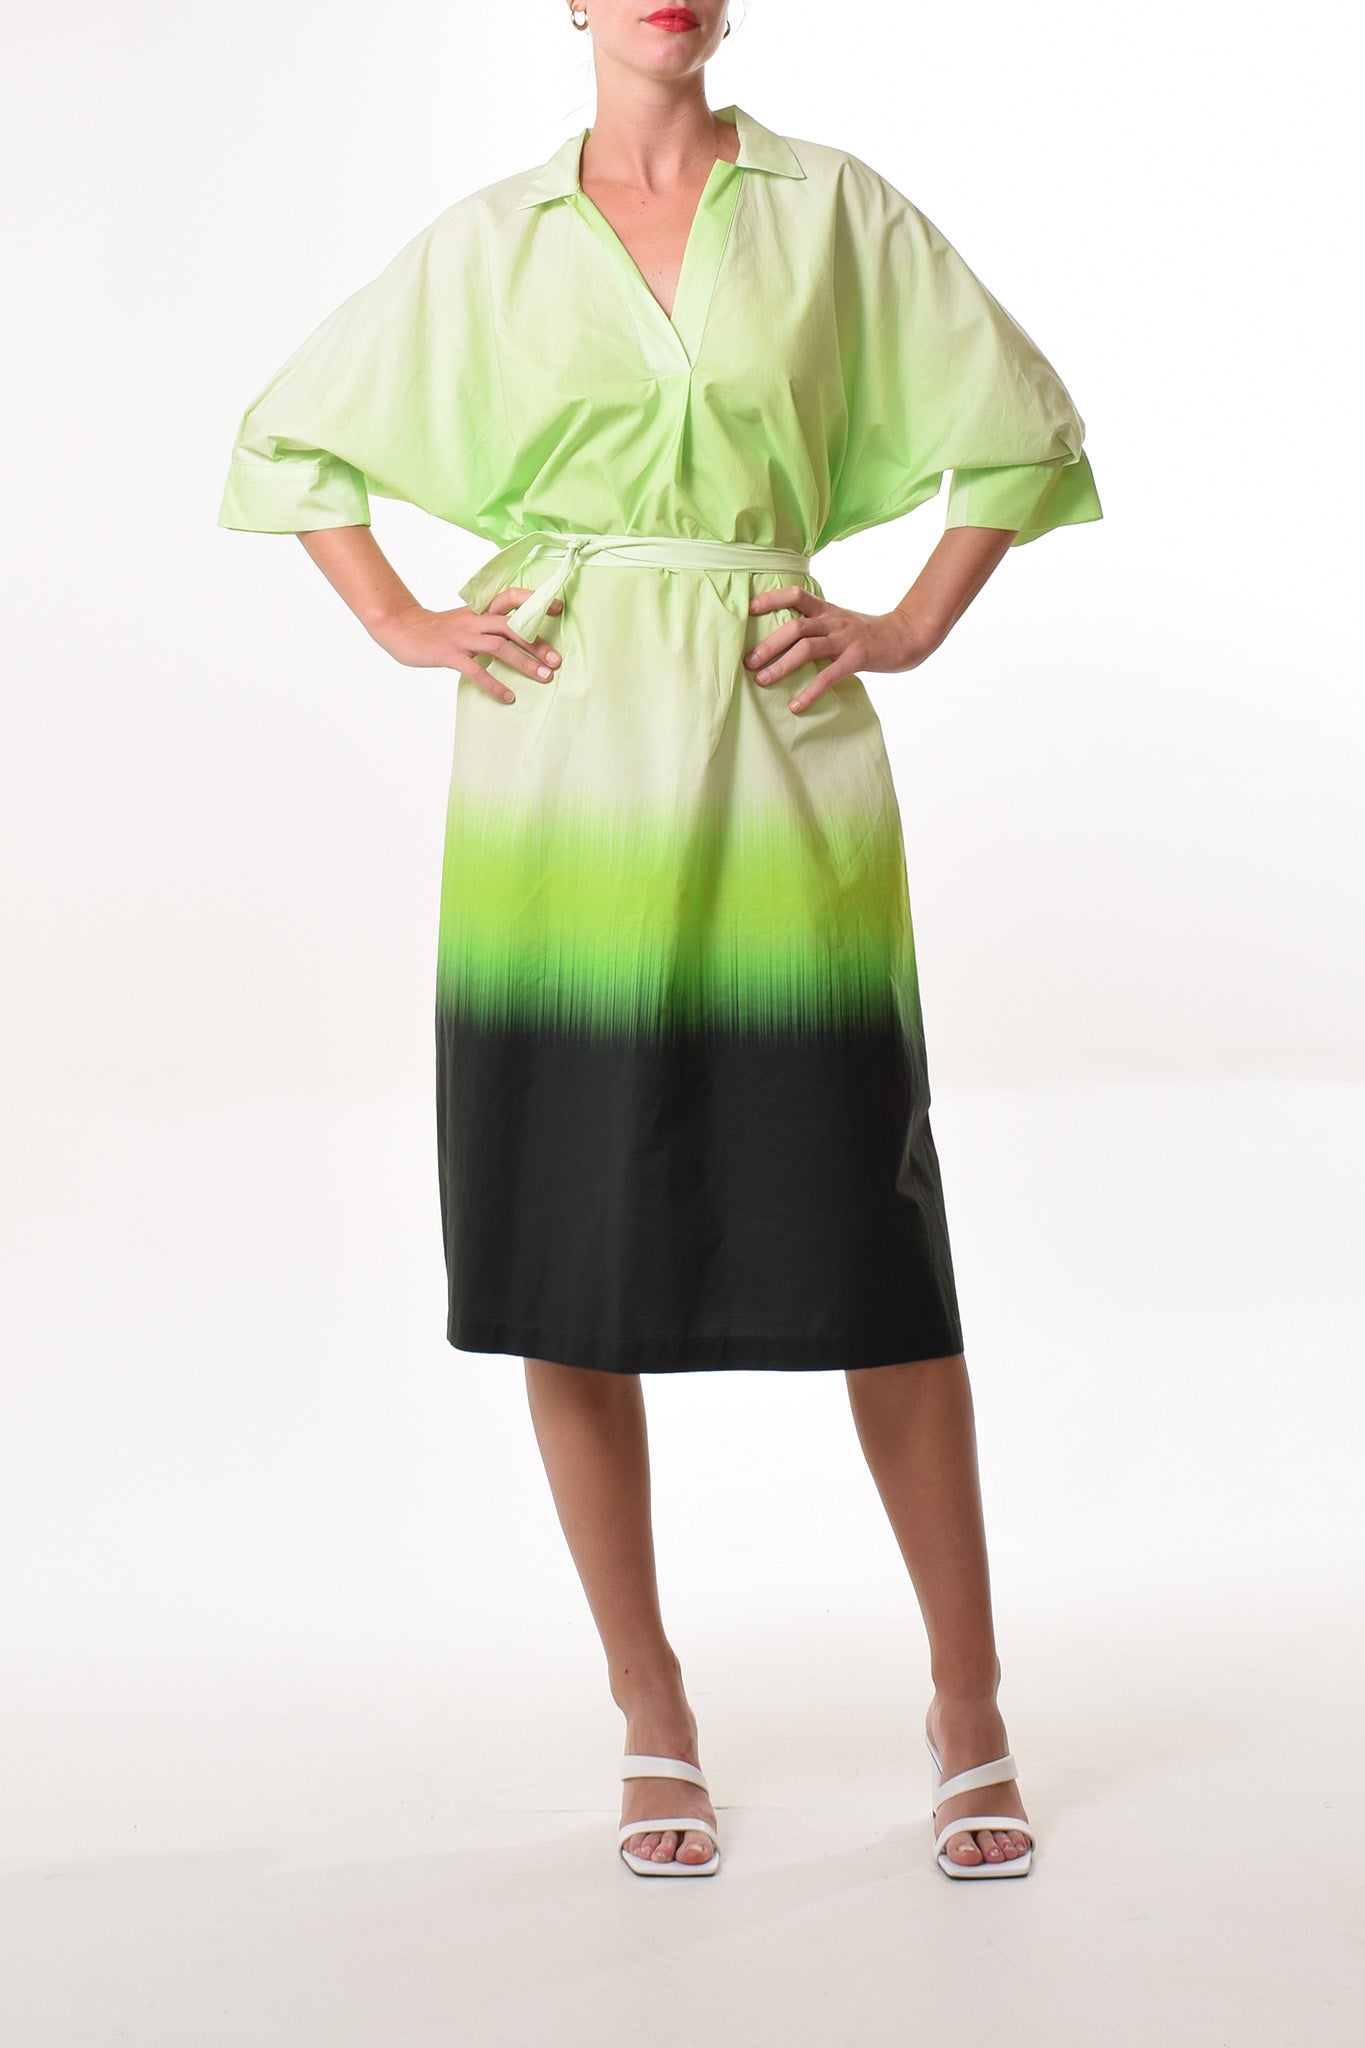 Tavira dress in Green (Lecil print cotton)